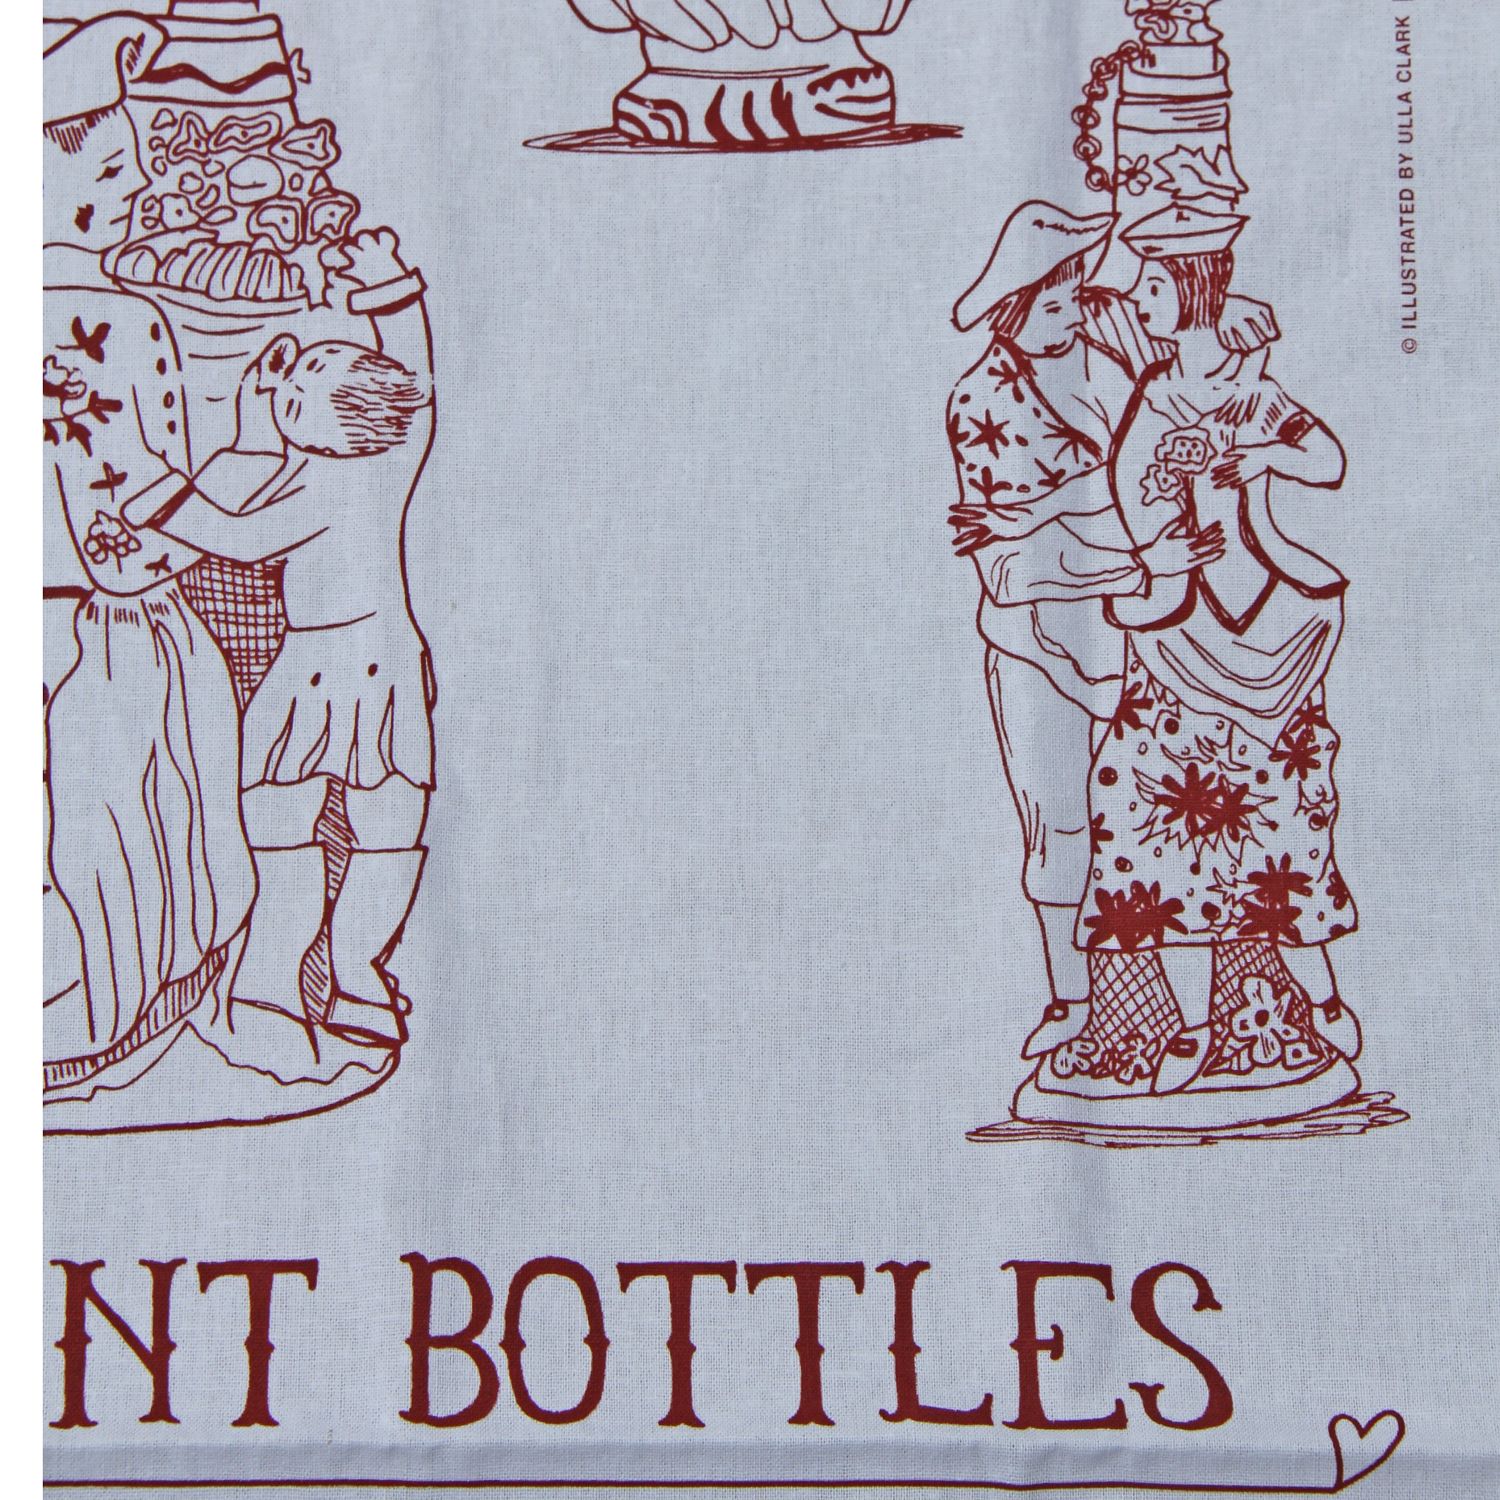 LUprints: Scent Bottles Teatowel Product Image 3 of 4